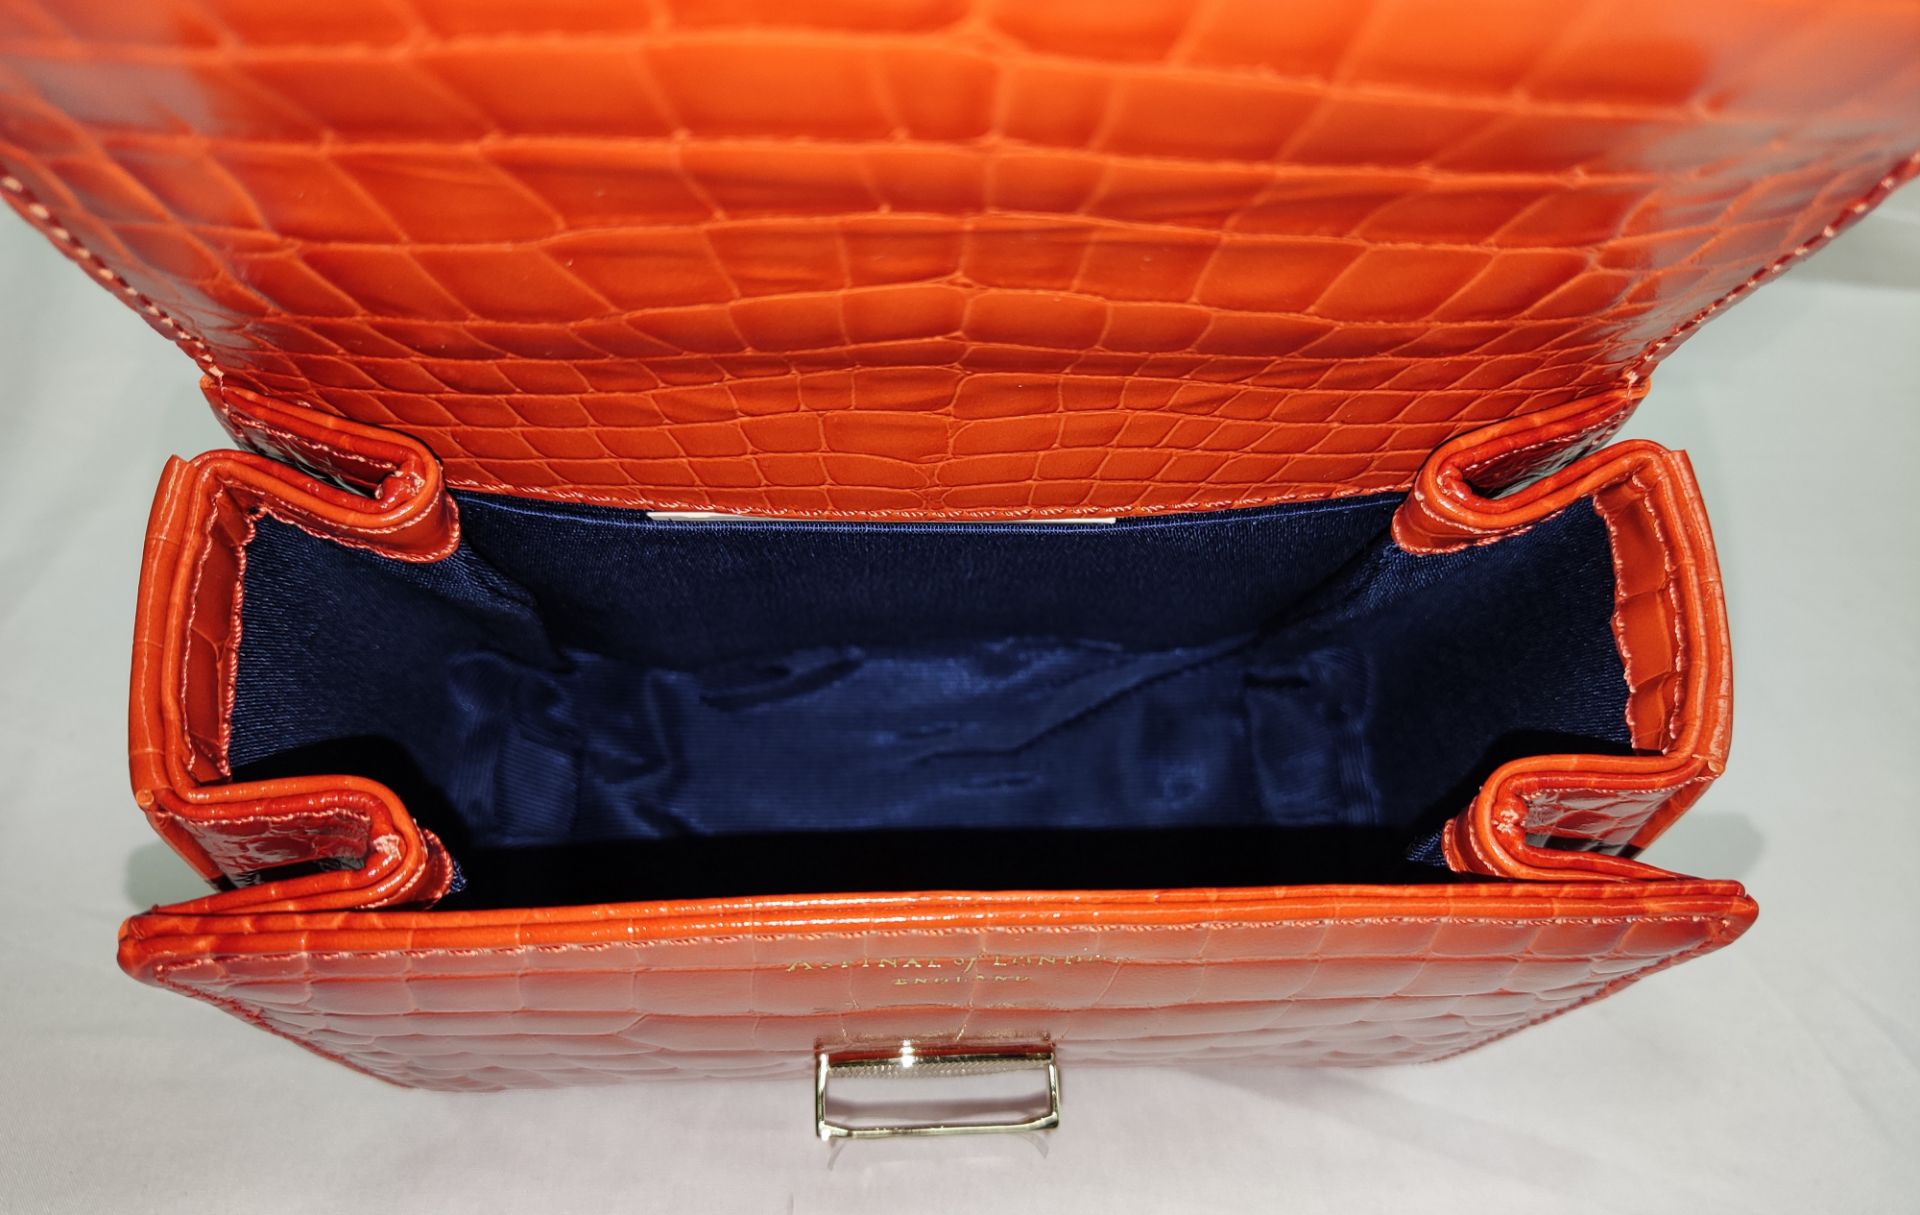 1 x ASPINAL OF LONDON Mayfair Mini Bag In Marmalade Orange - Embossed Crocodile Print - New/ - Image 15 of 27